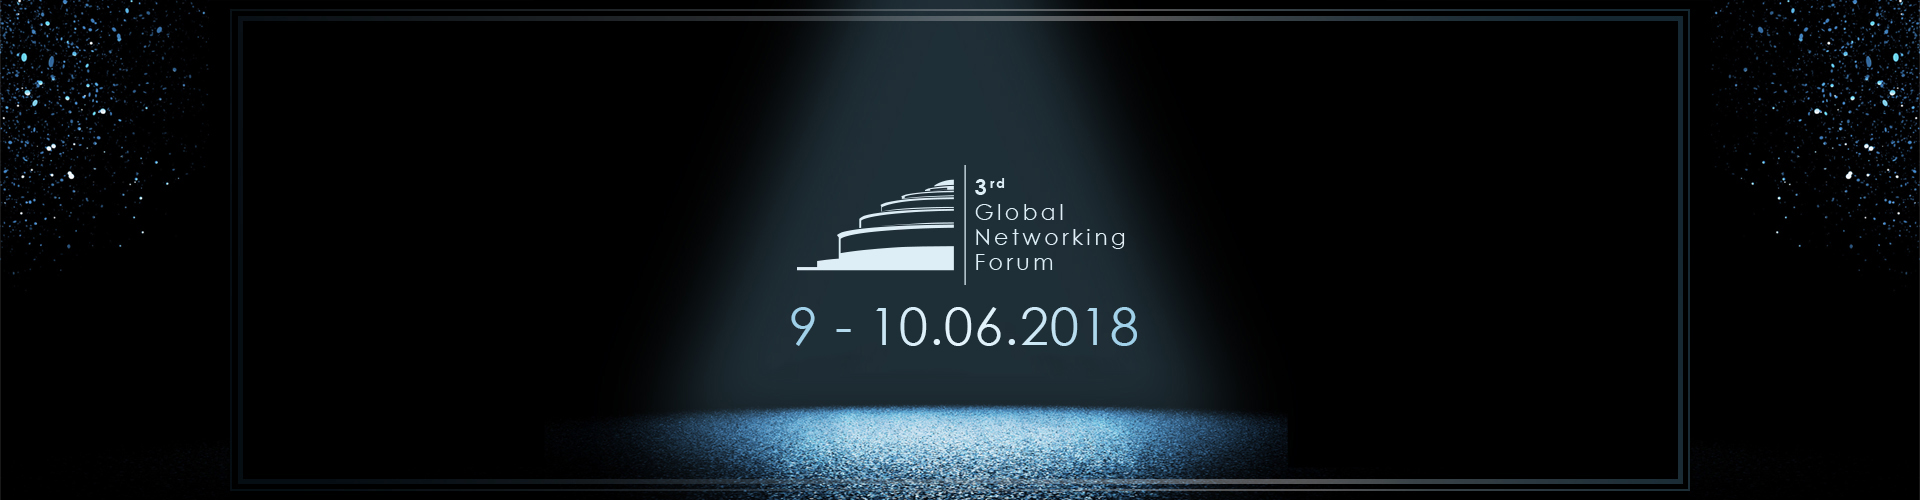   3rd Global Networking Forum - Konferencja - podsumowanie (VIDEO) 